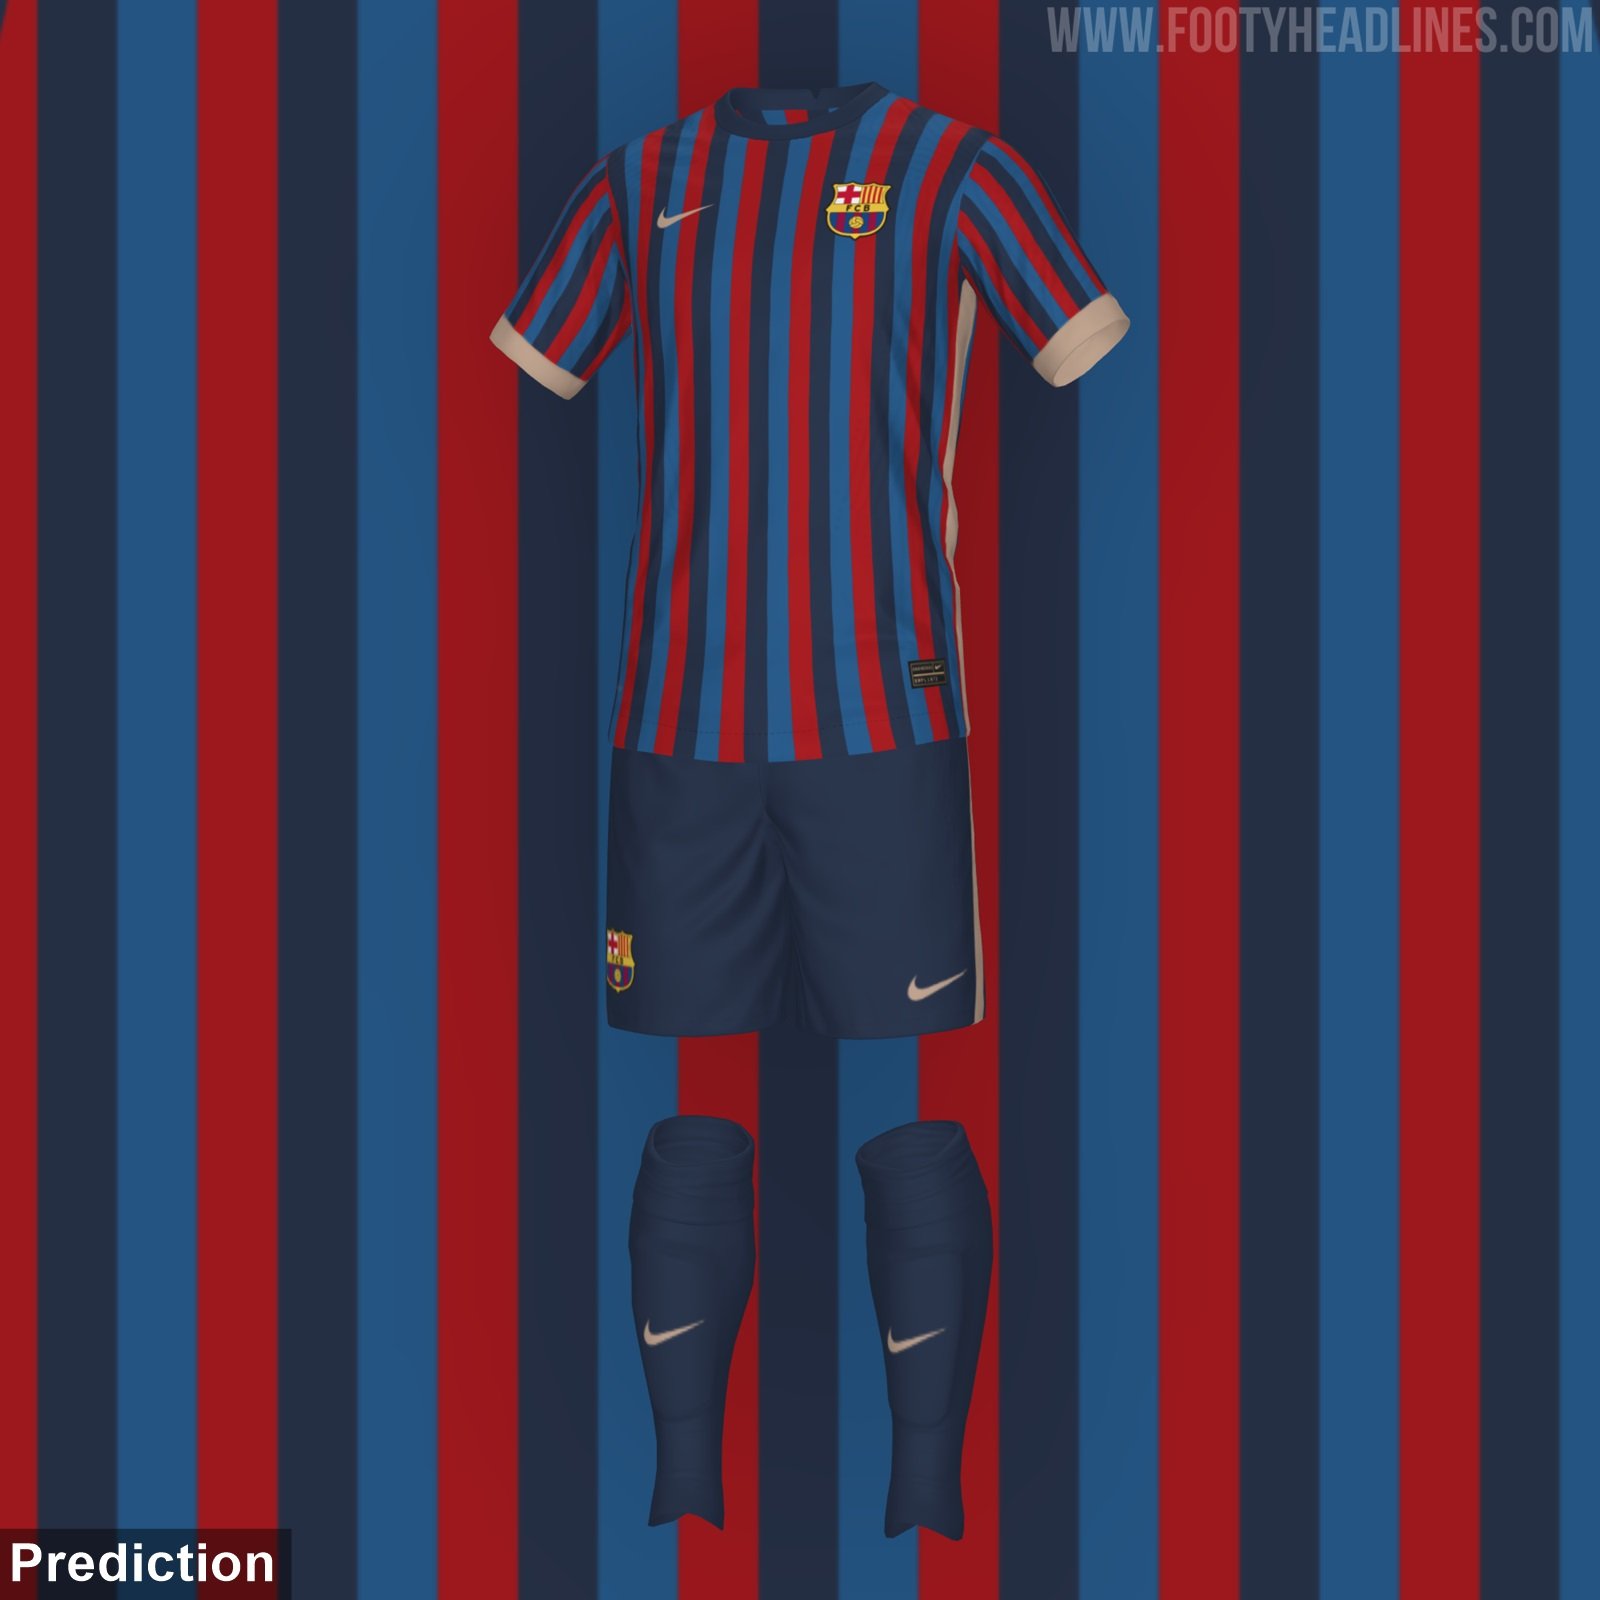 Camiseta equipacion Barca 2022 2023 Footy Headlines